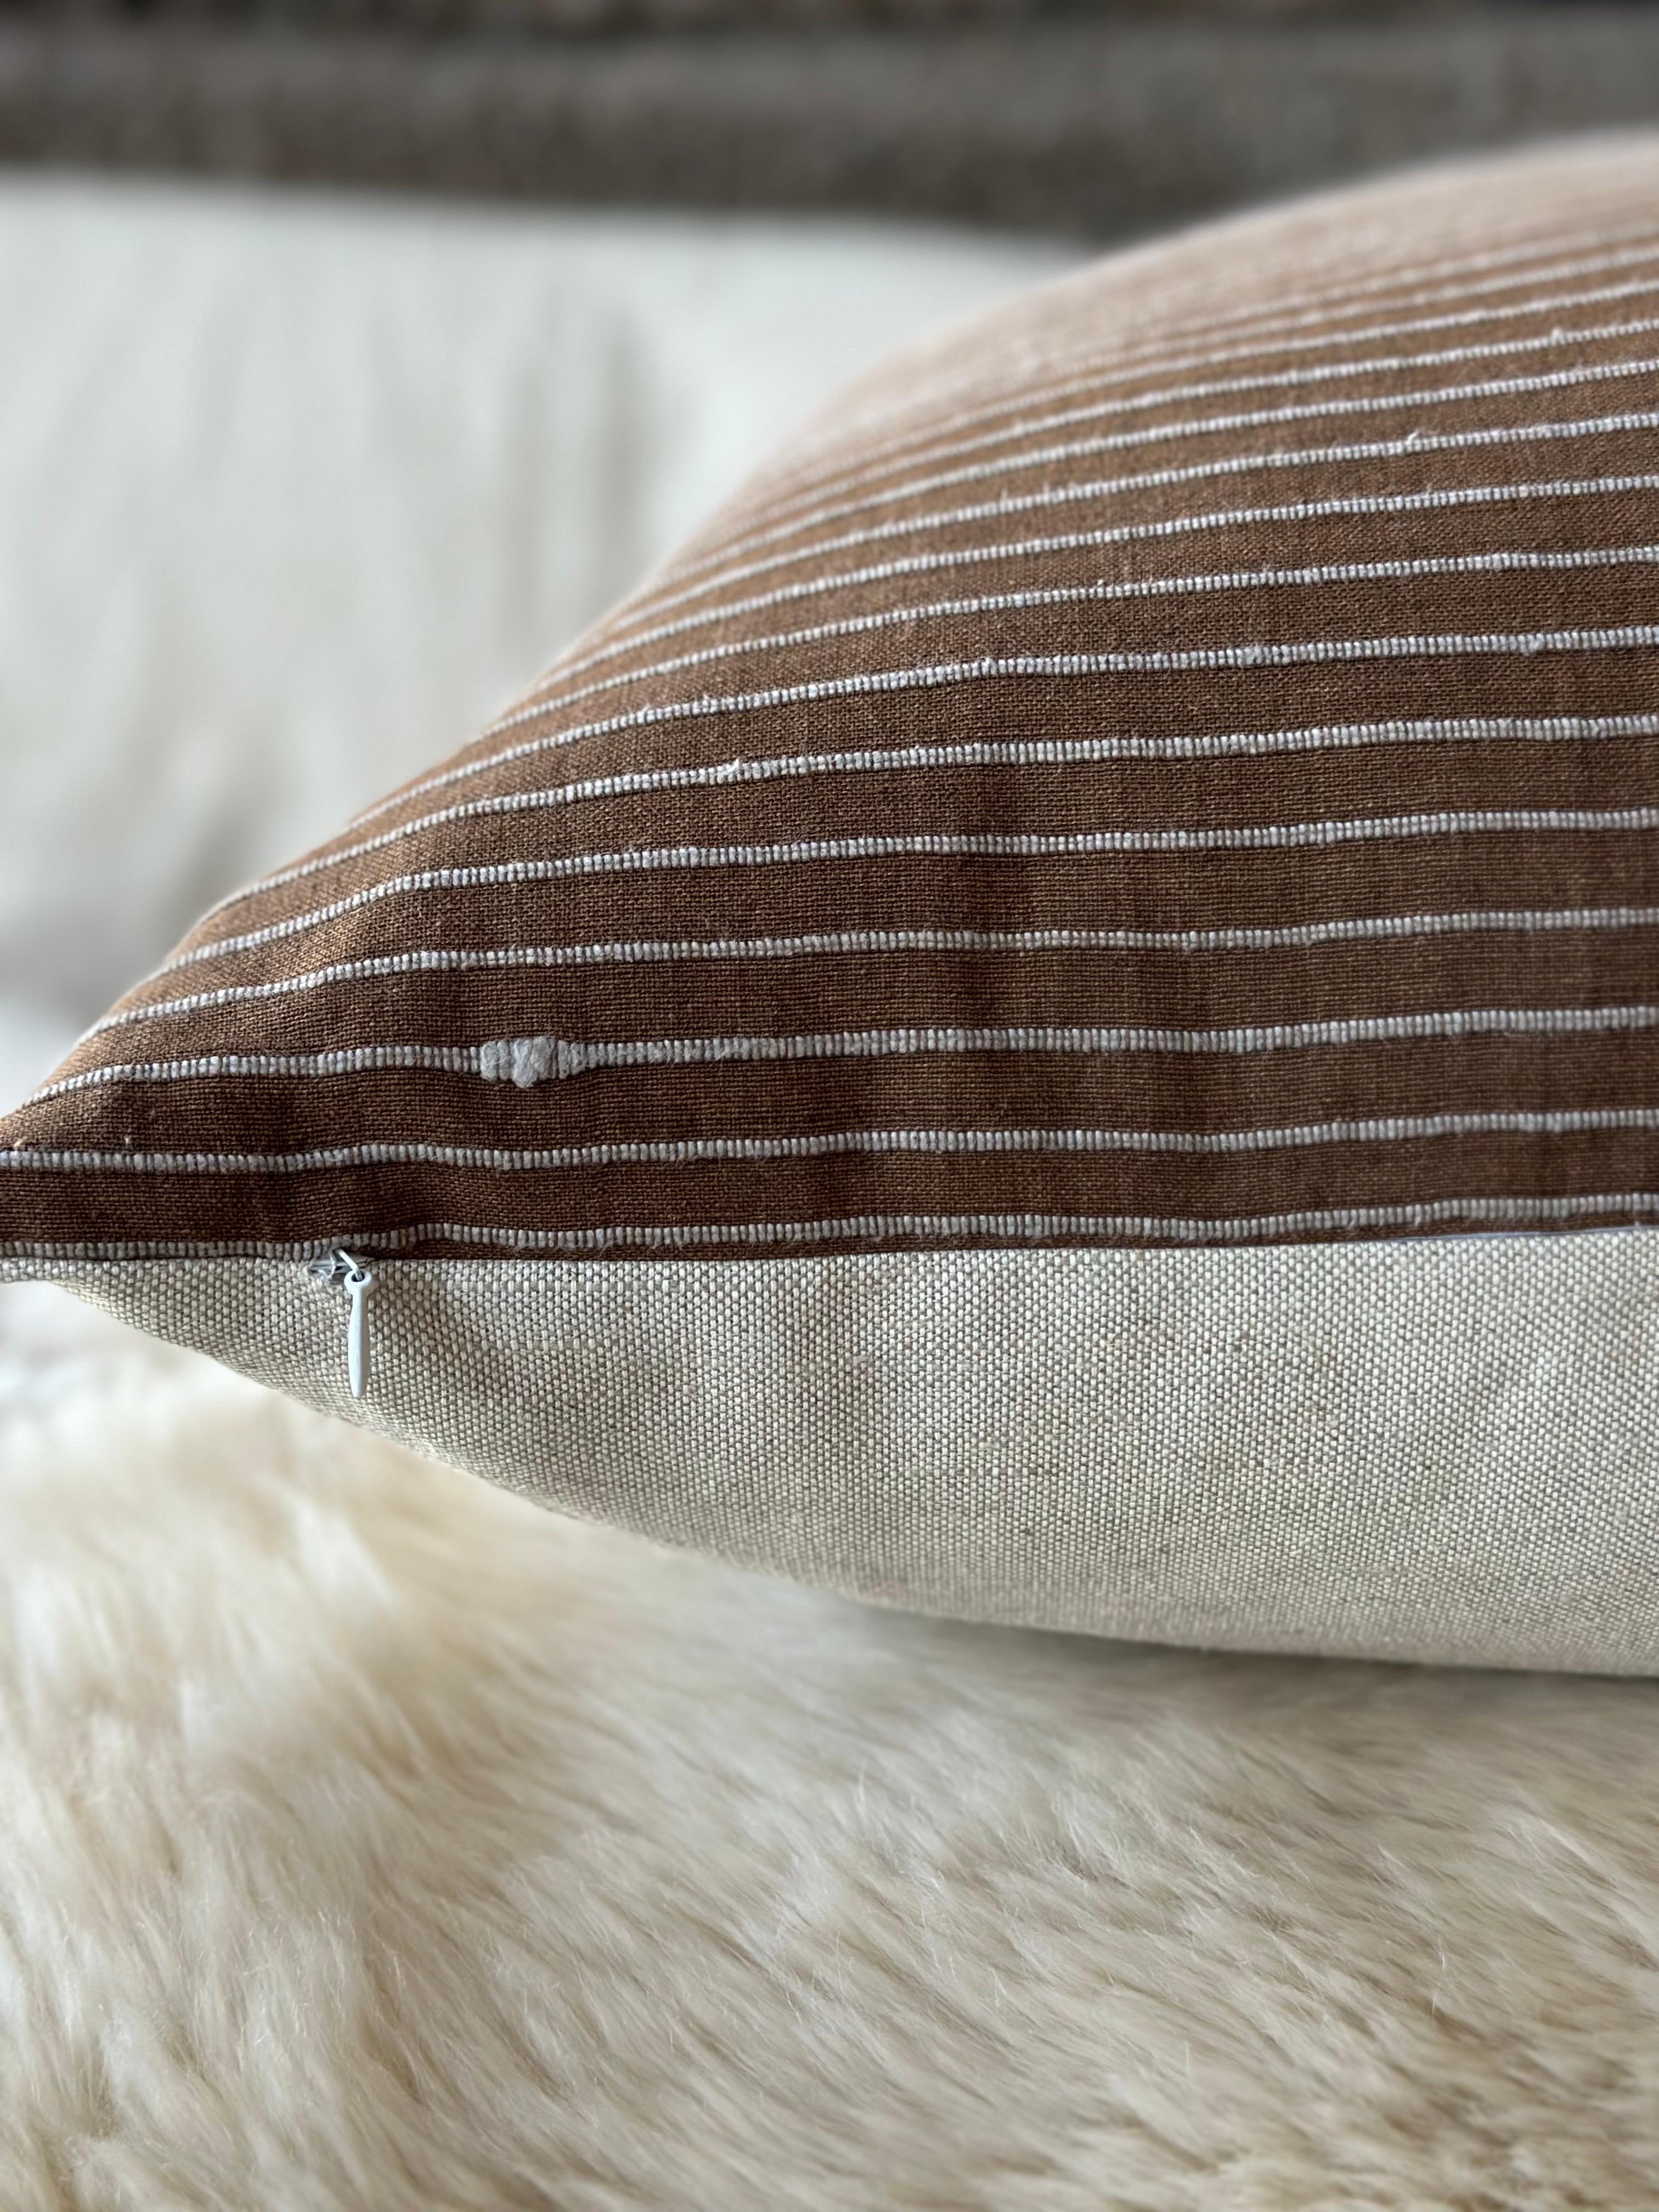 Coton Whittier Brown and Cream Stripe Linen Pillow with Downs Insert (Oreiller en lin à rayures marron et crème avec garniture en duvet)